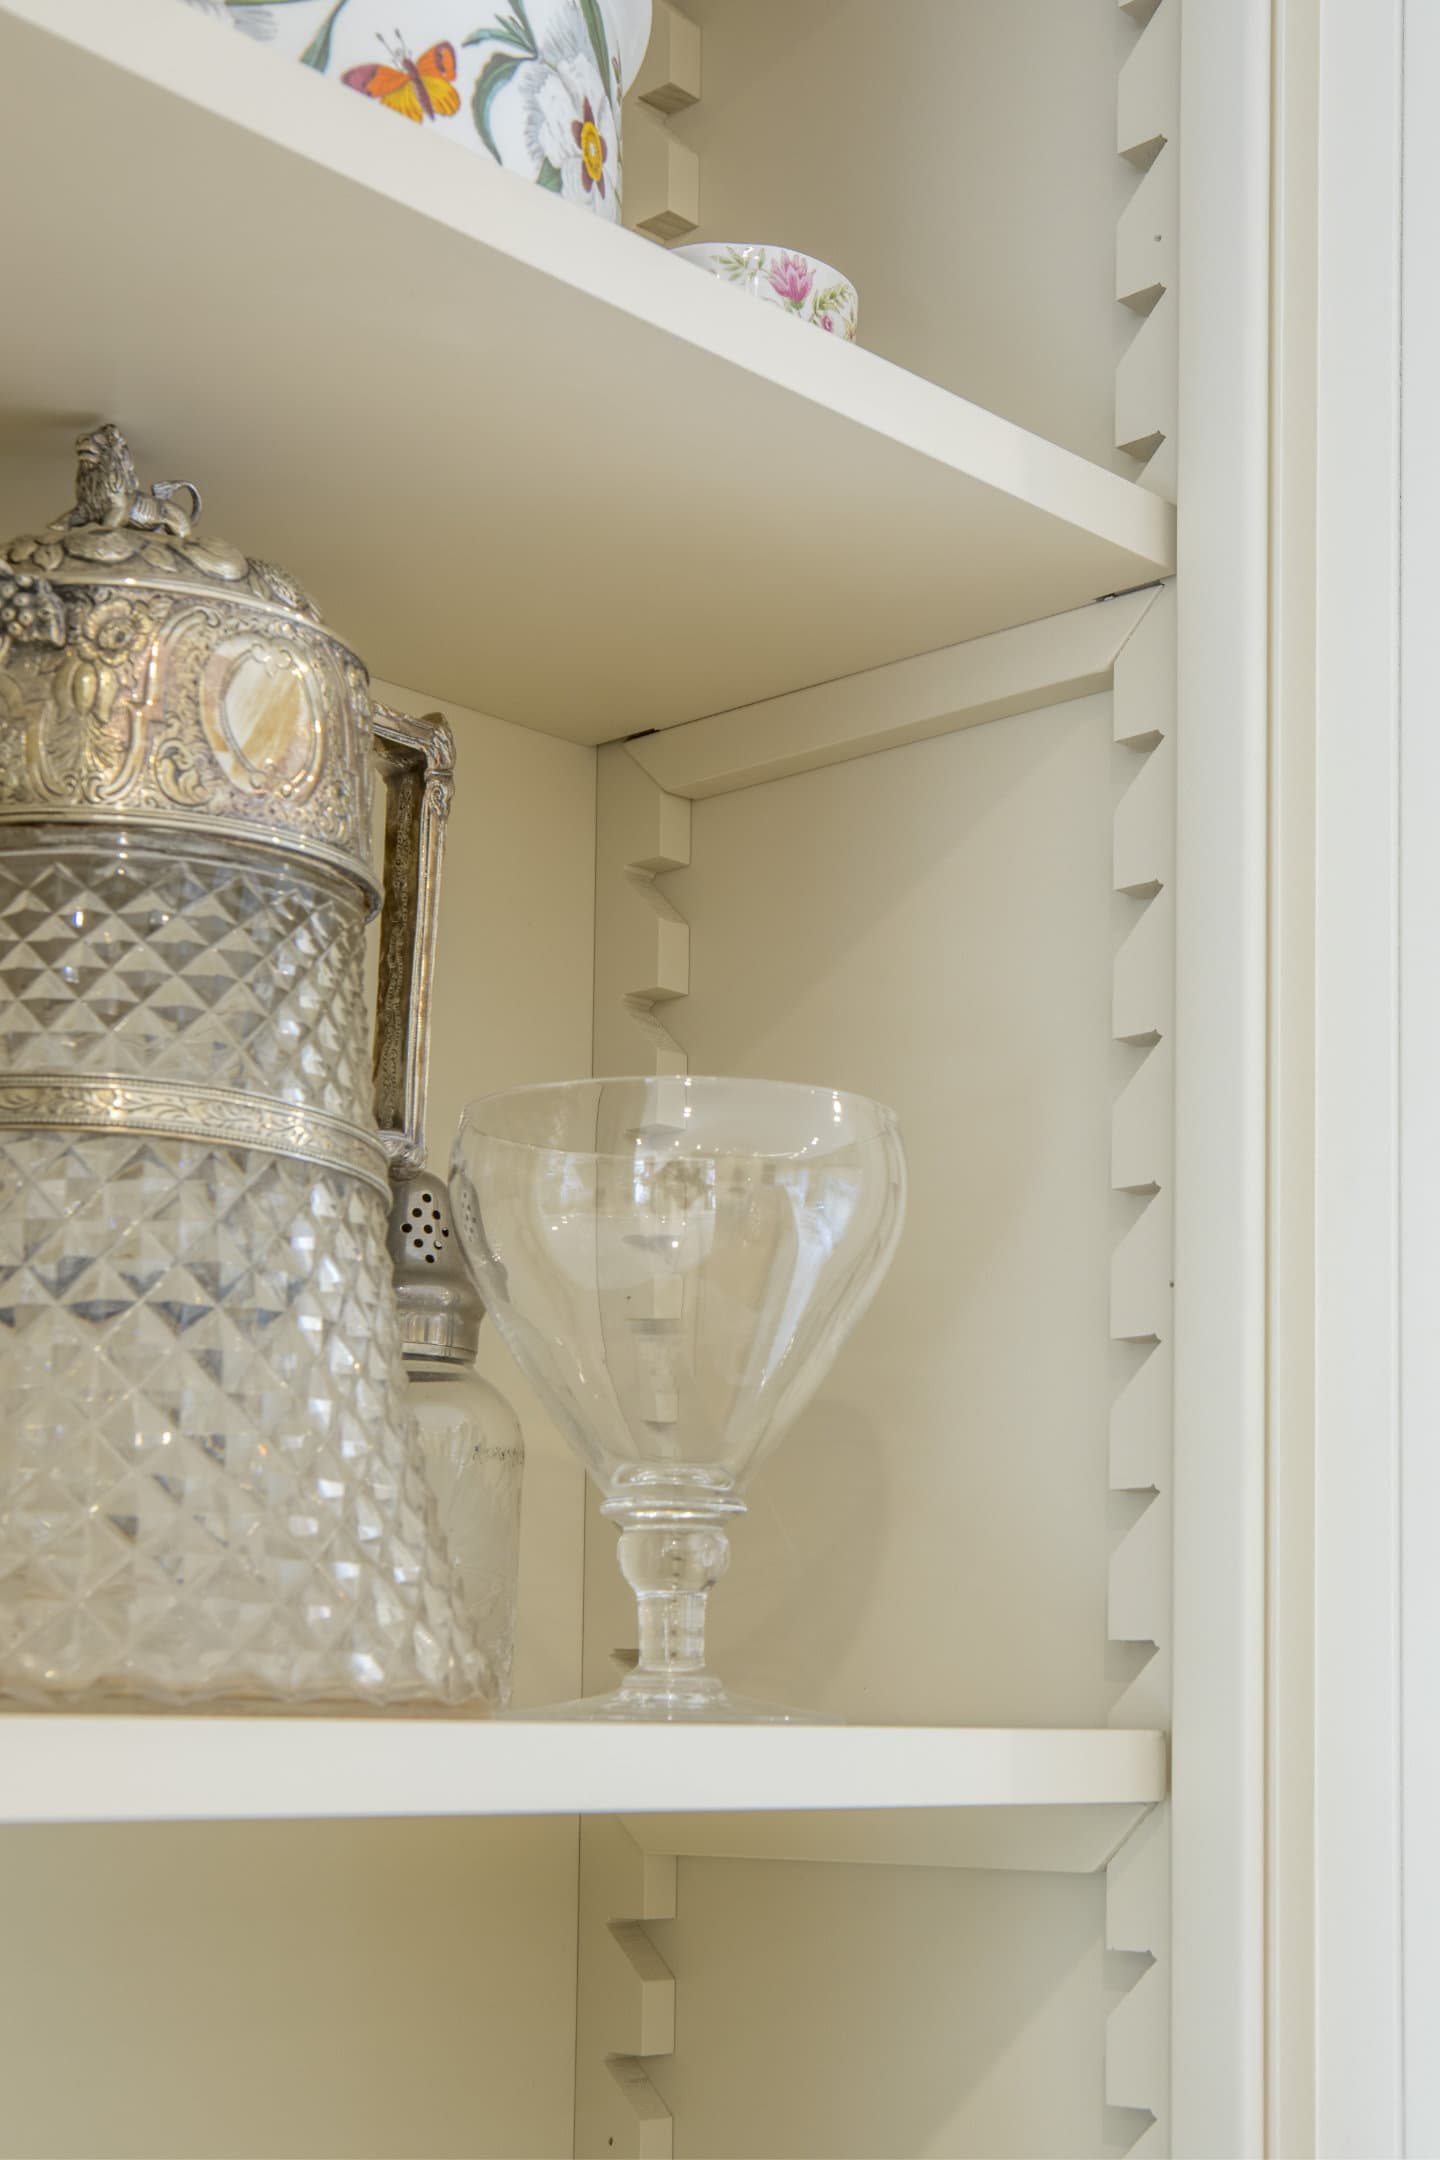 Some glassware sat in an open cupboard